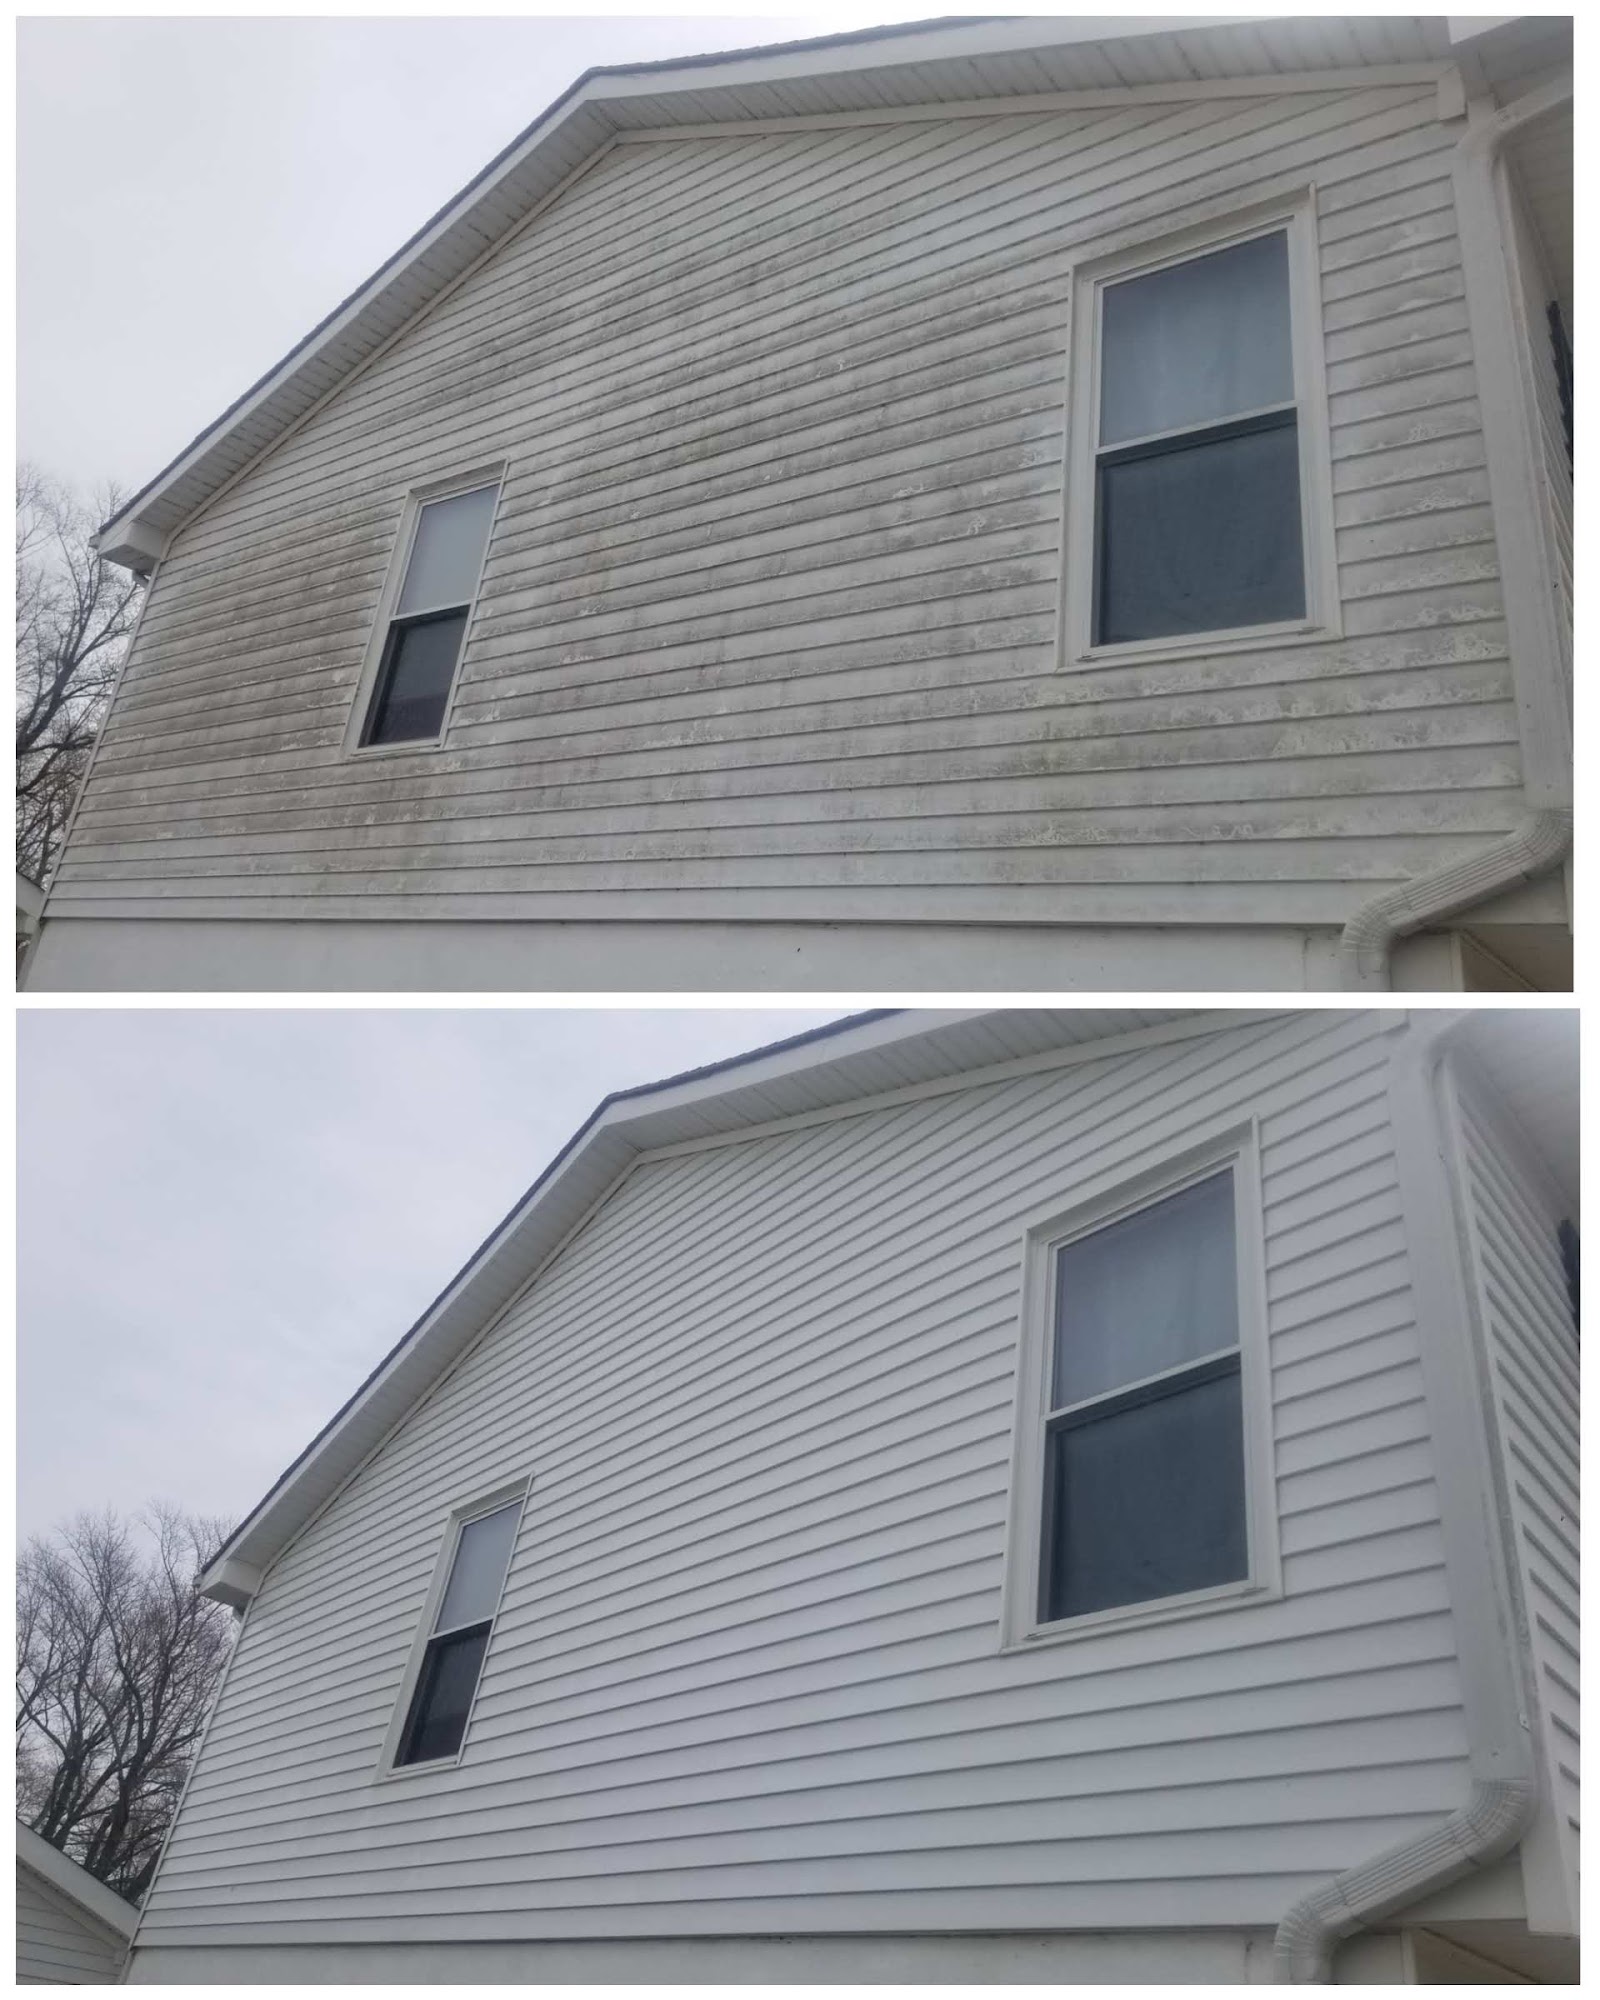 Peaks & Streaks Roof and Exterior Cleaning, LLC 603 Meadowbrook Dr, Kearney Missouri 64060